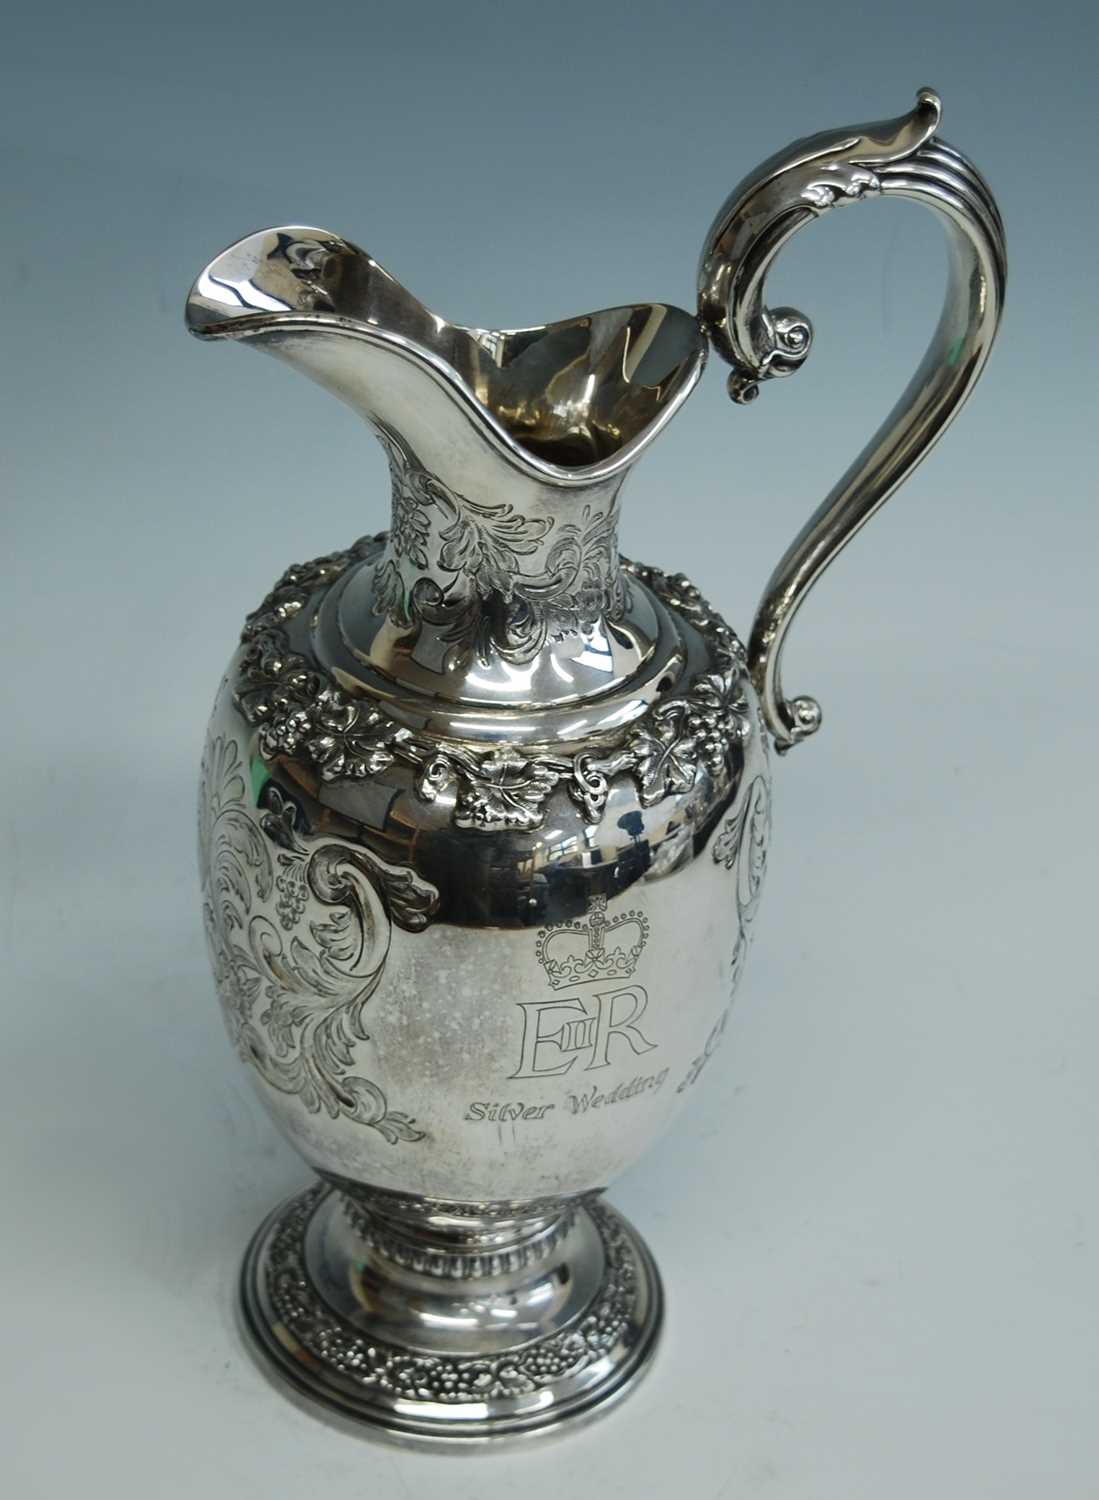 A Garrard & Co silver commemorative wine ewer for the Silver Wedding anniversary of Queen